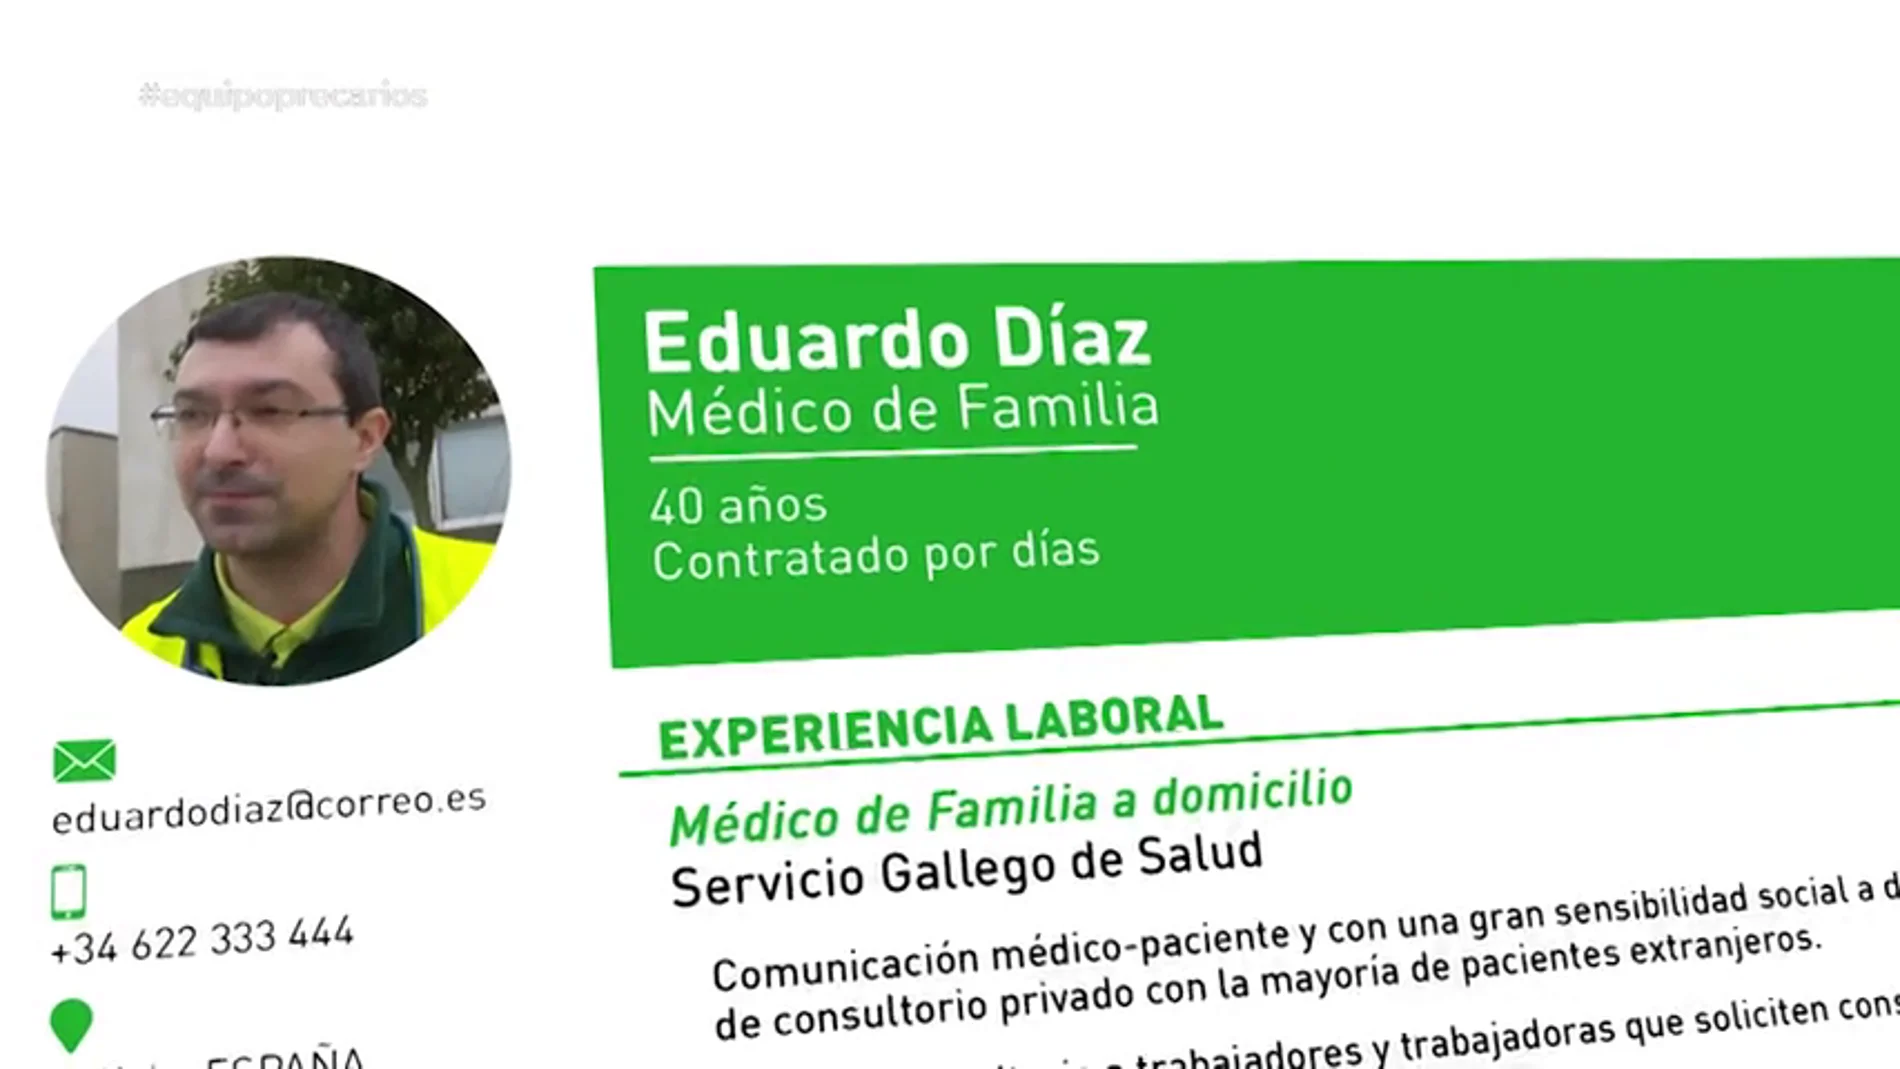 La precaria situación de Eduardo, único médico de Sanxenxo: "Trabajo como eventual, llevo 50 contratos en seis años"